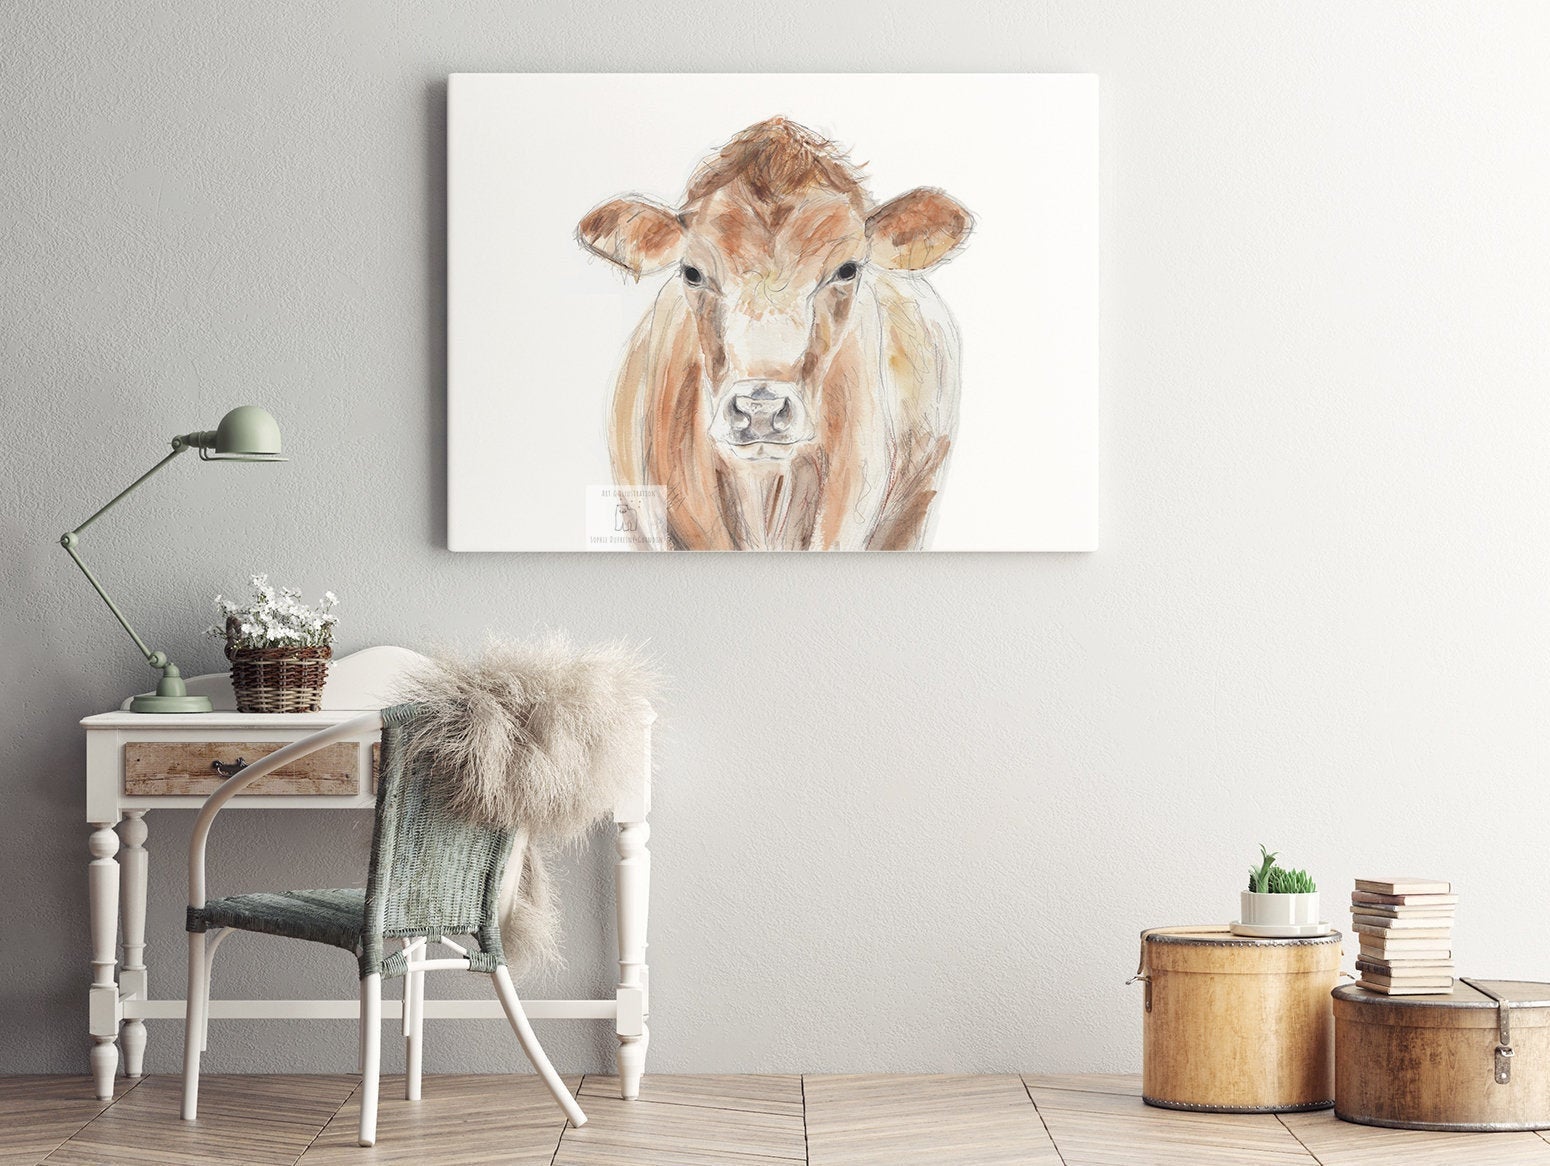 COW Painting art print, cow wall decor, farm animals prints